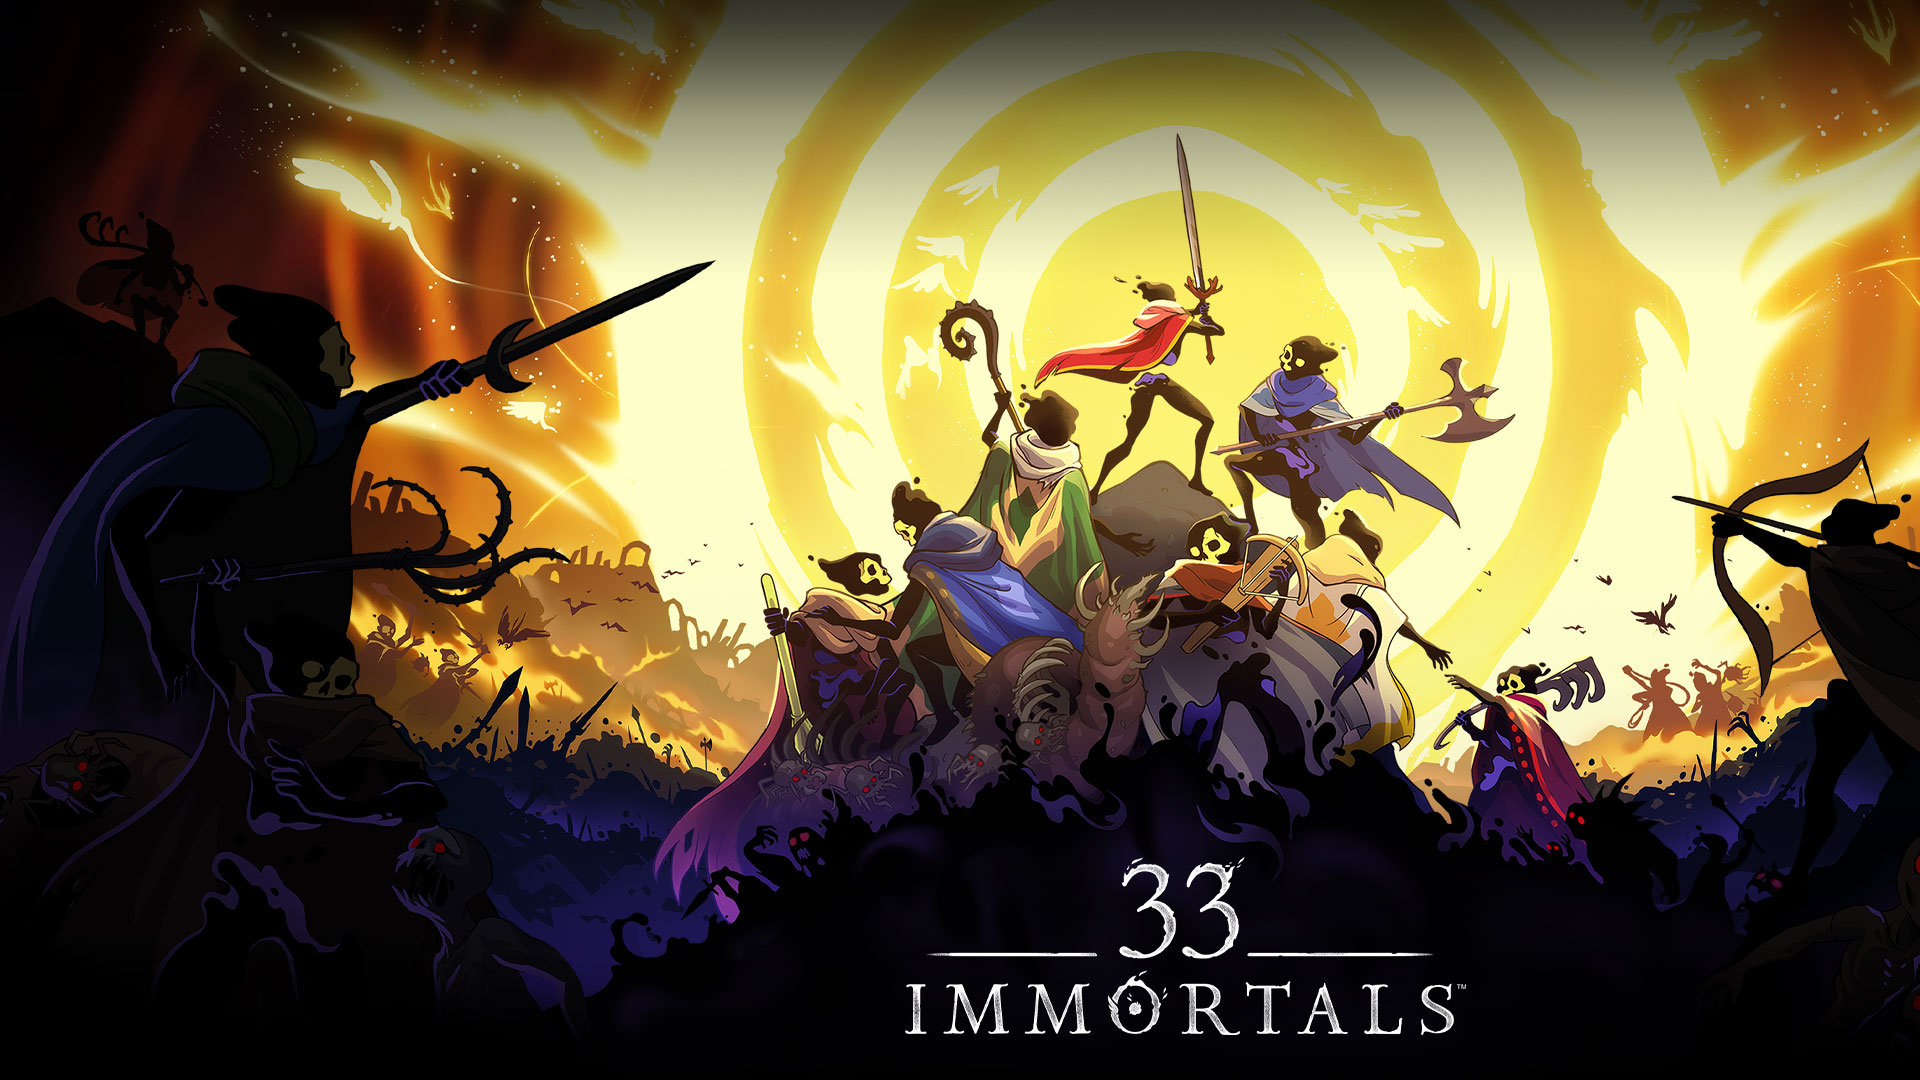 『33 Immortals』、空に大型の照明が輝く戦場で、武器を持ち上げる不死身な者たち。